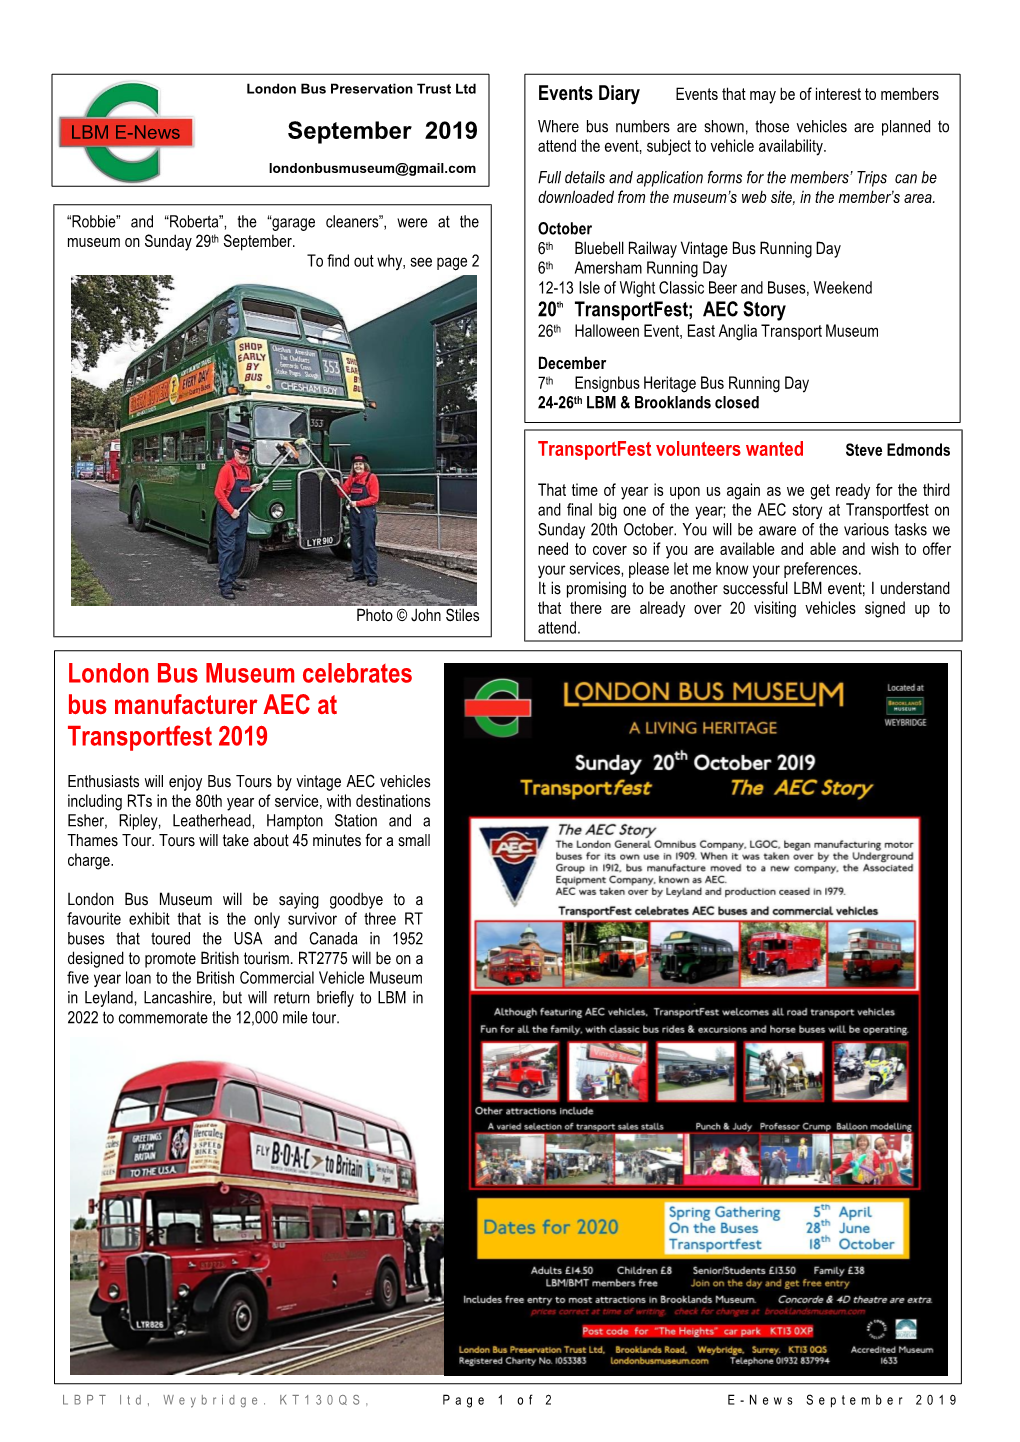 London Bus Museum Celebrates Bus Manufacturer AEC at Transportfest 2019